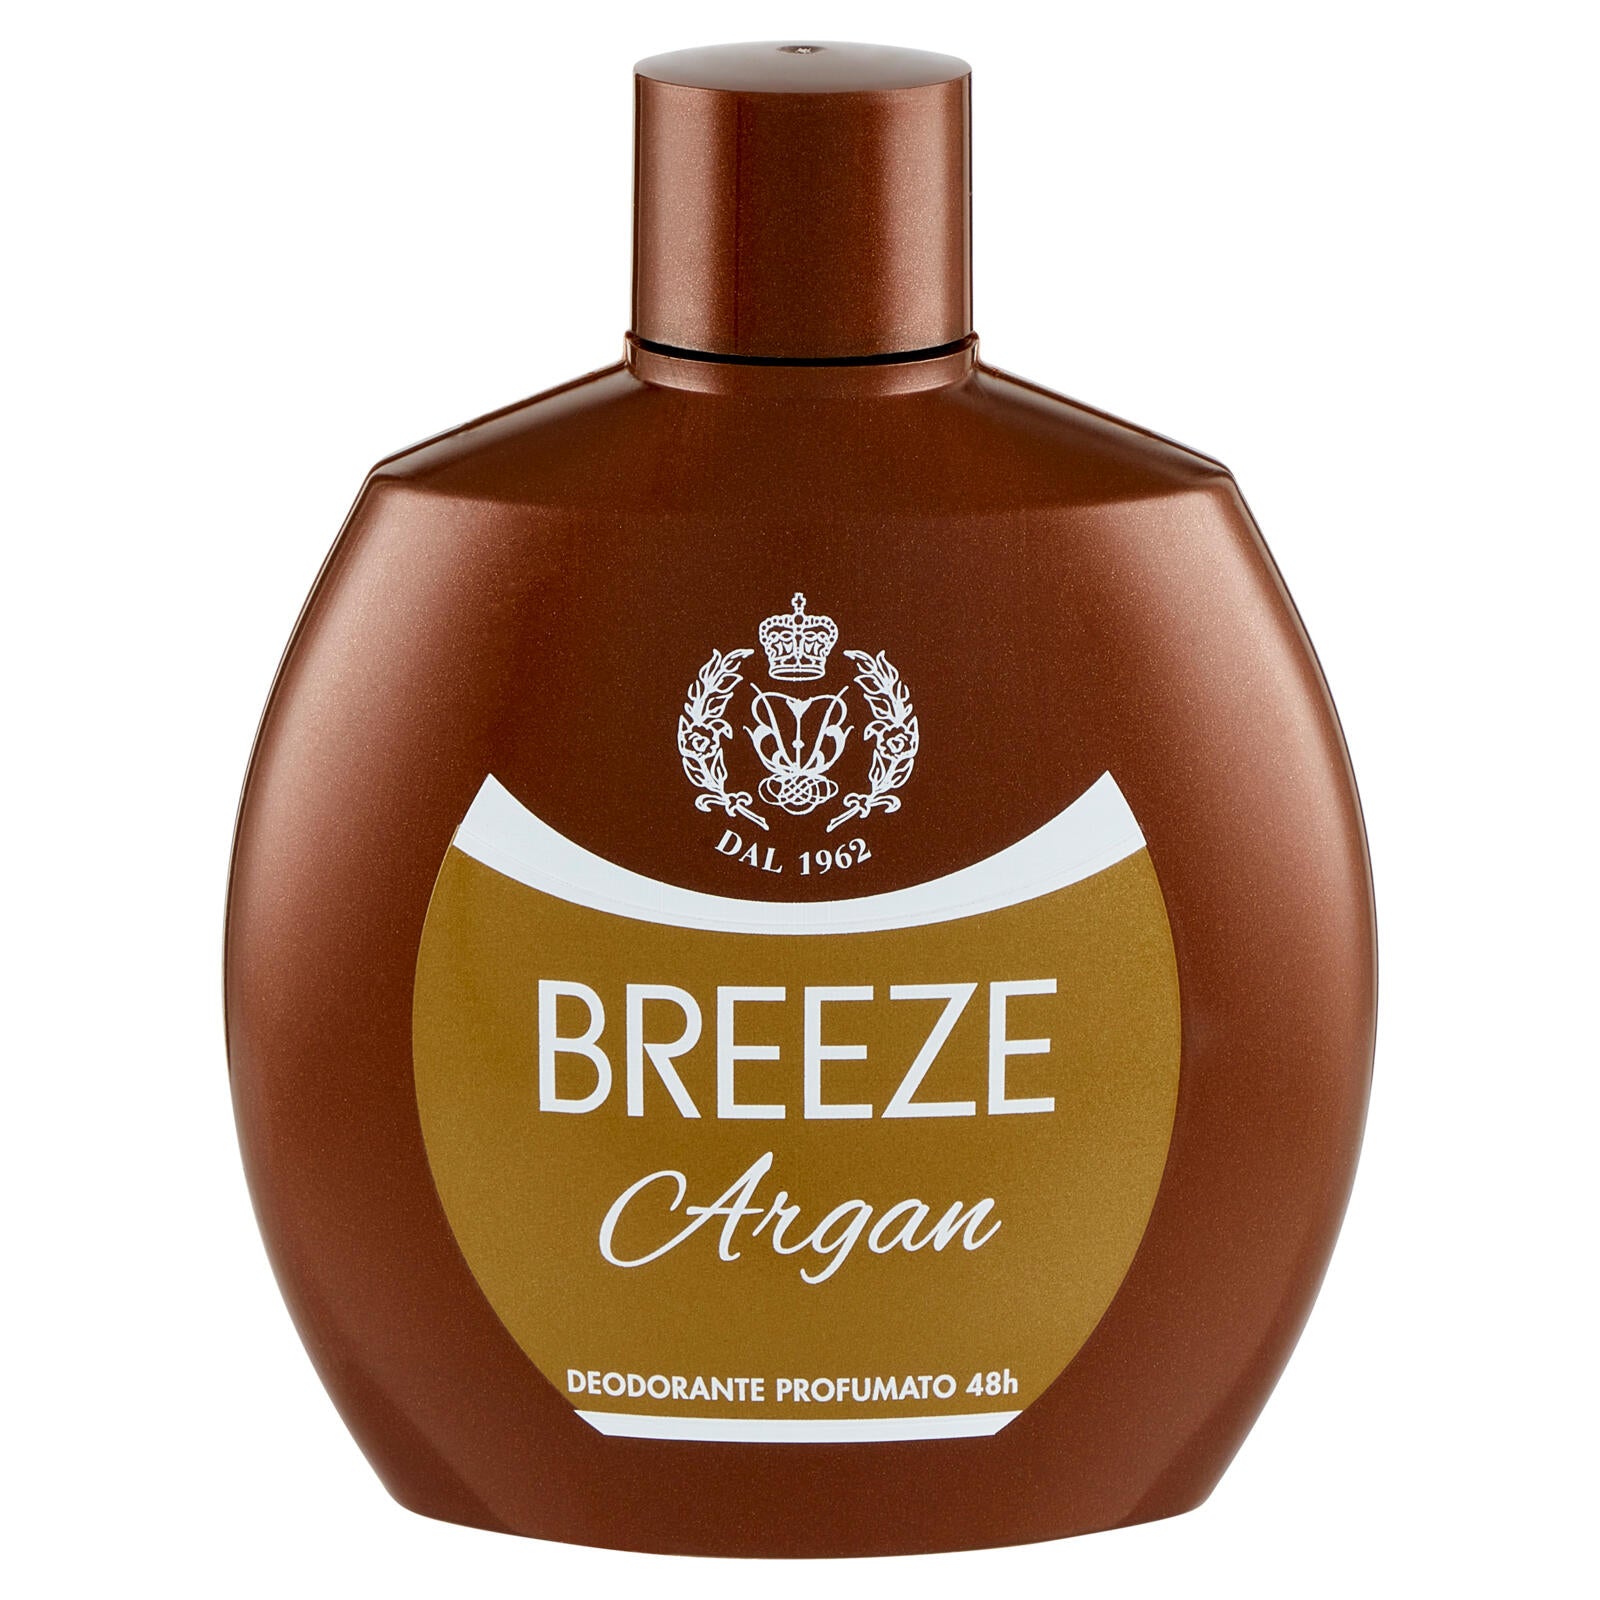 Breeze Argan Deodorante Profumato 48h 100 mL